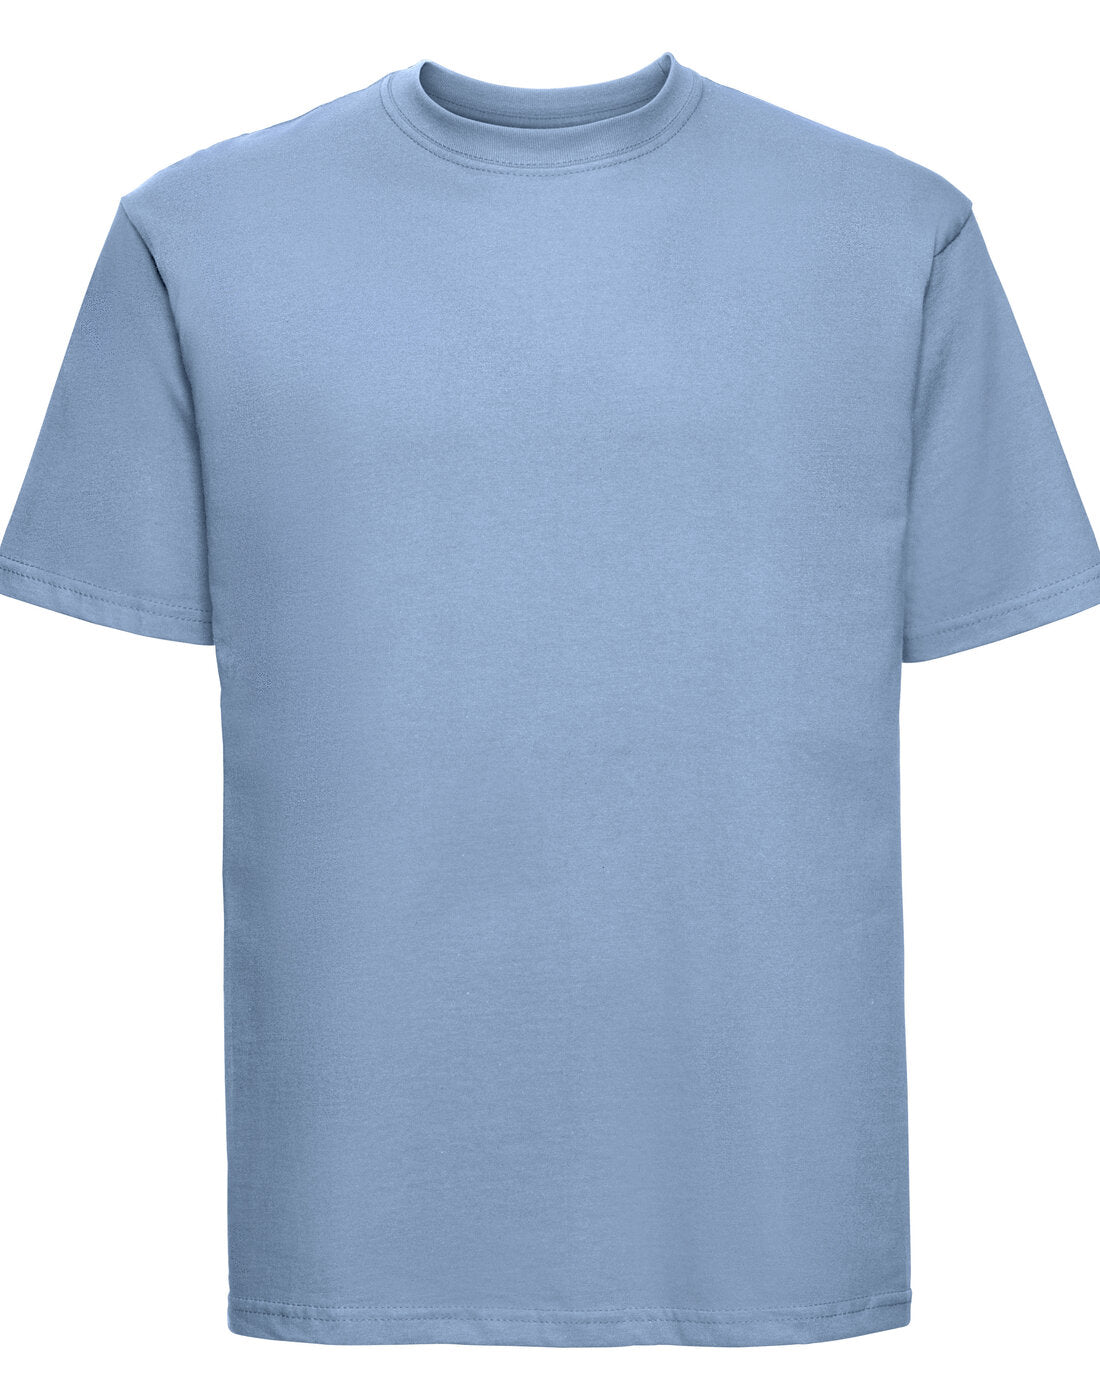 Russell Classic Unisex T-Shirt - Sky Blue